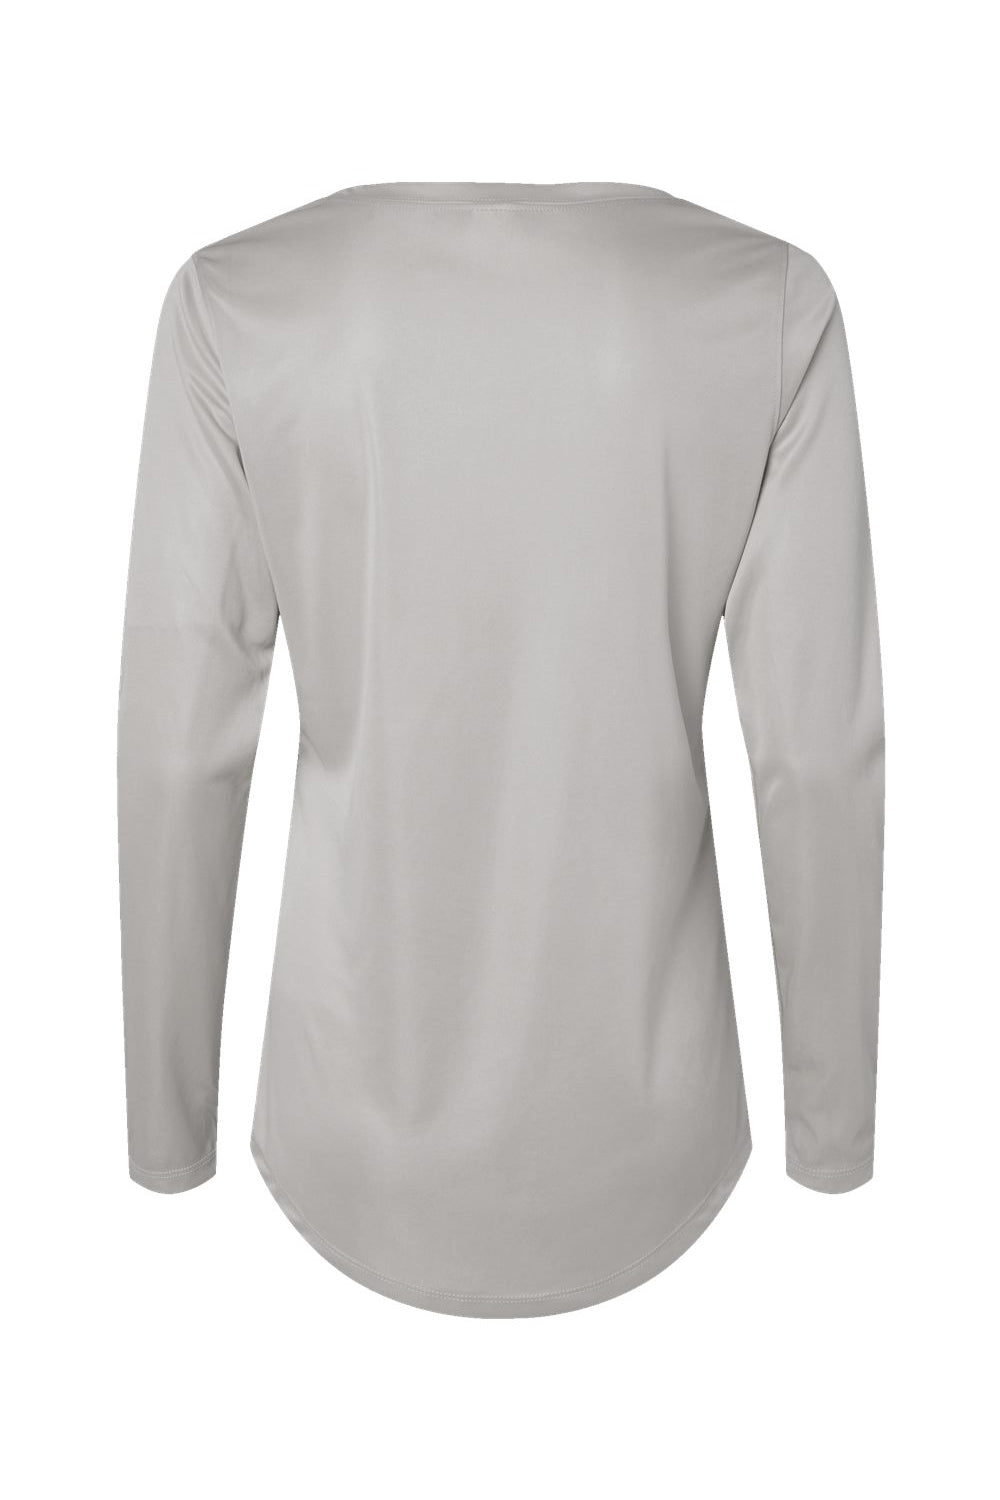 Paragon 214 Womens Islander Performance Long Sleeve Scoop Neck T-Shirt Aluminum Grey Flat Back